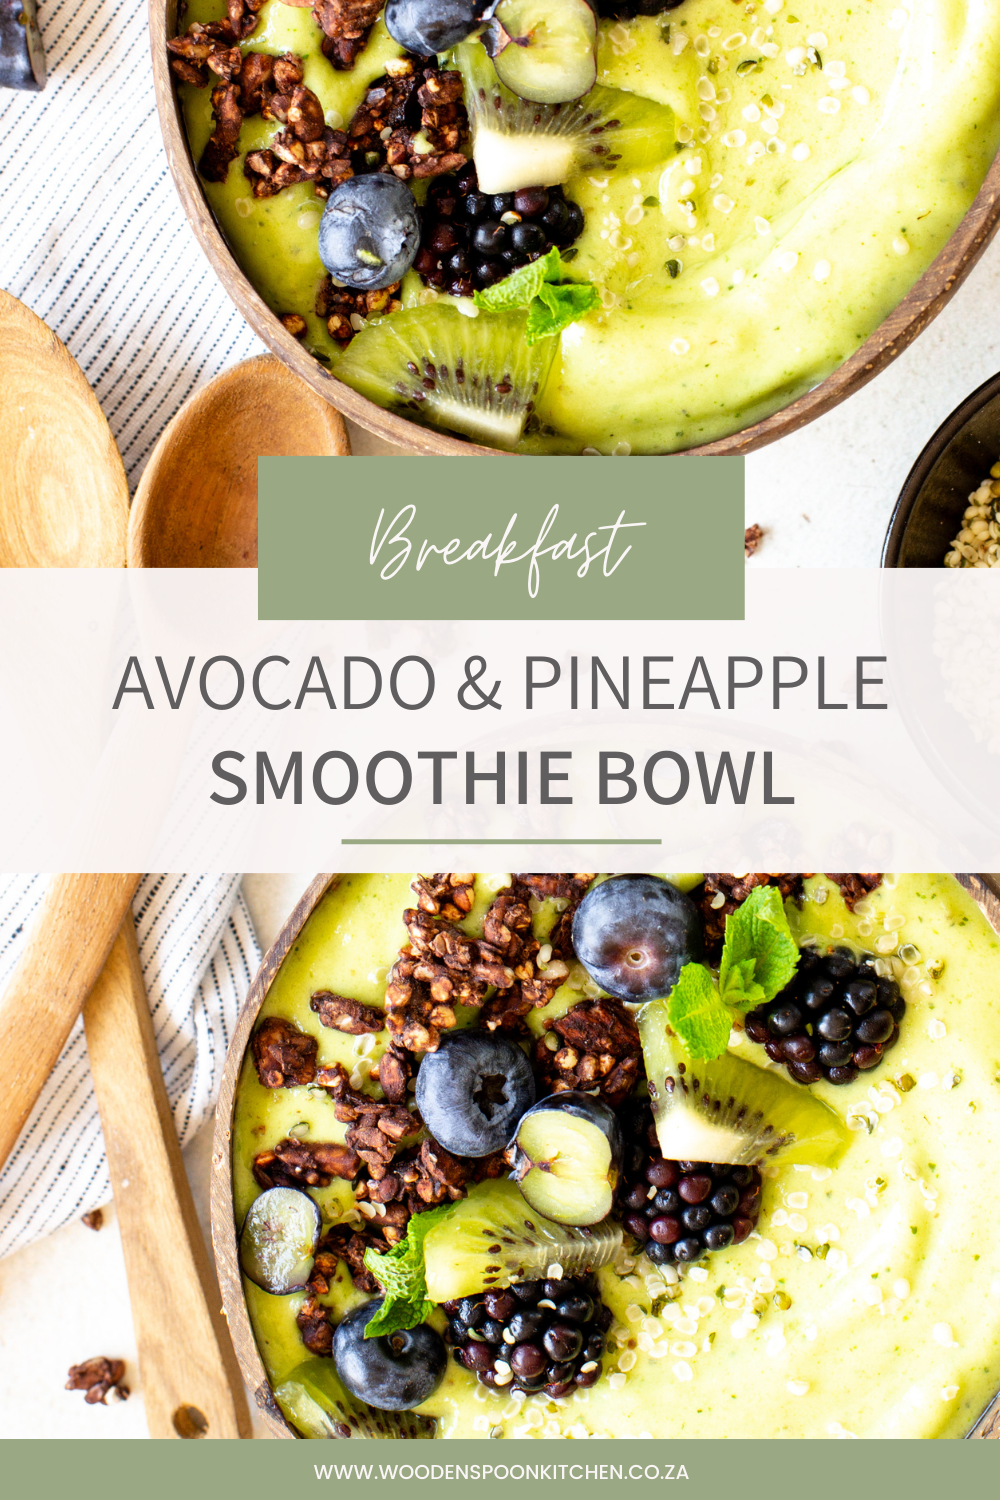 Avocado and pineapple smoothie bowl